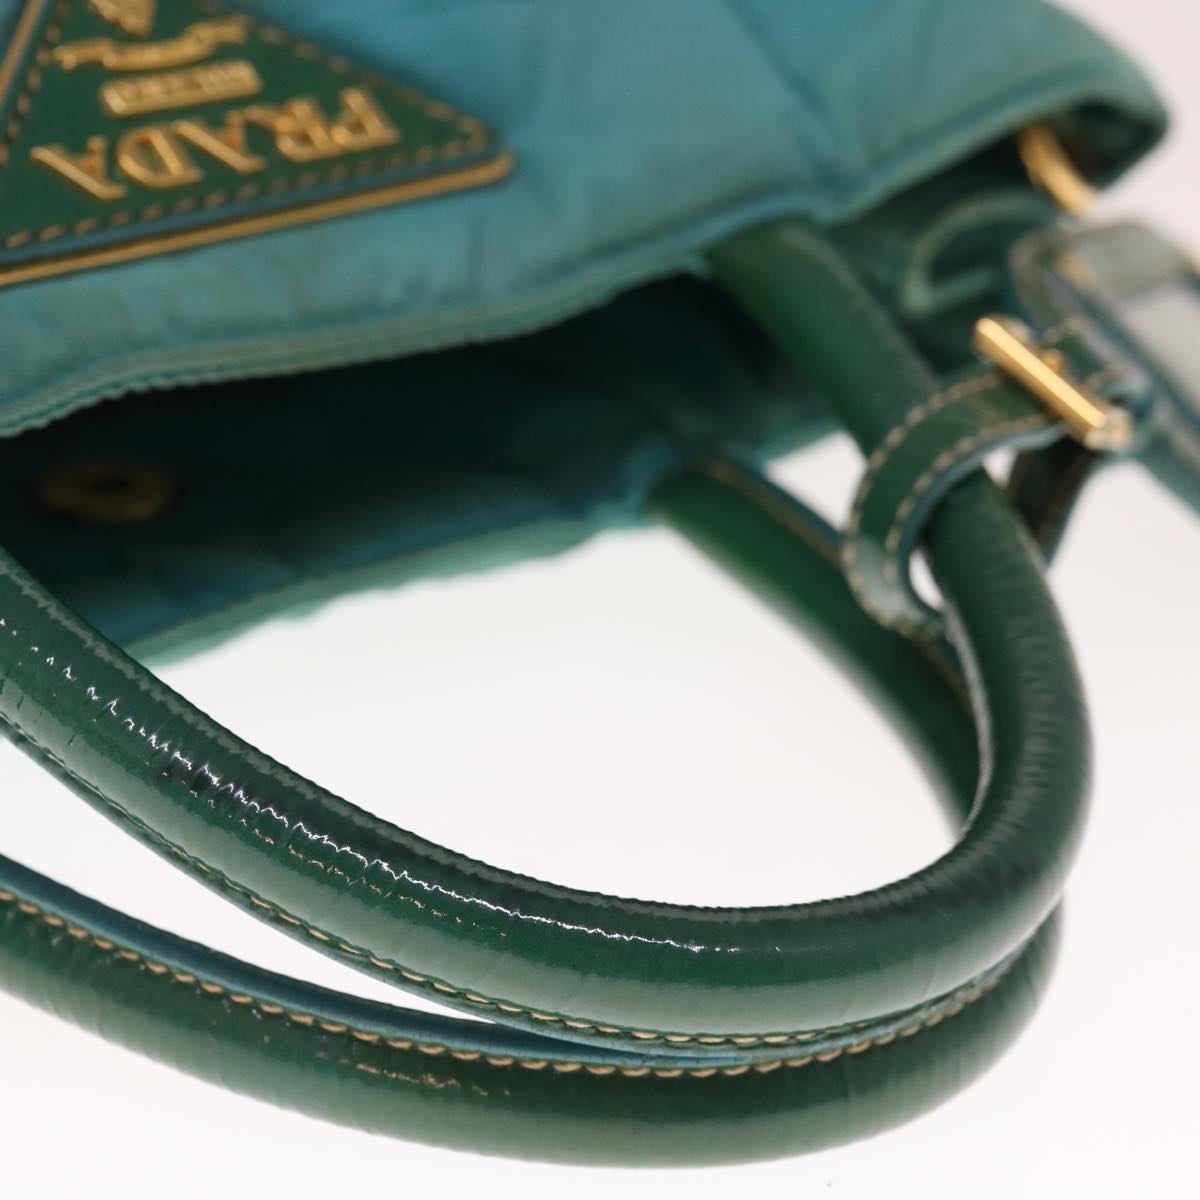 PRADA Hand Bag Nylon 2way Turquoise Blue Auth ac2661